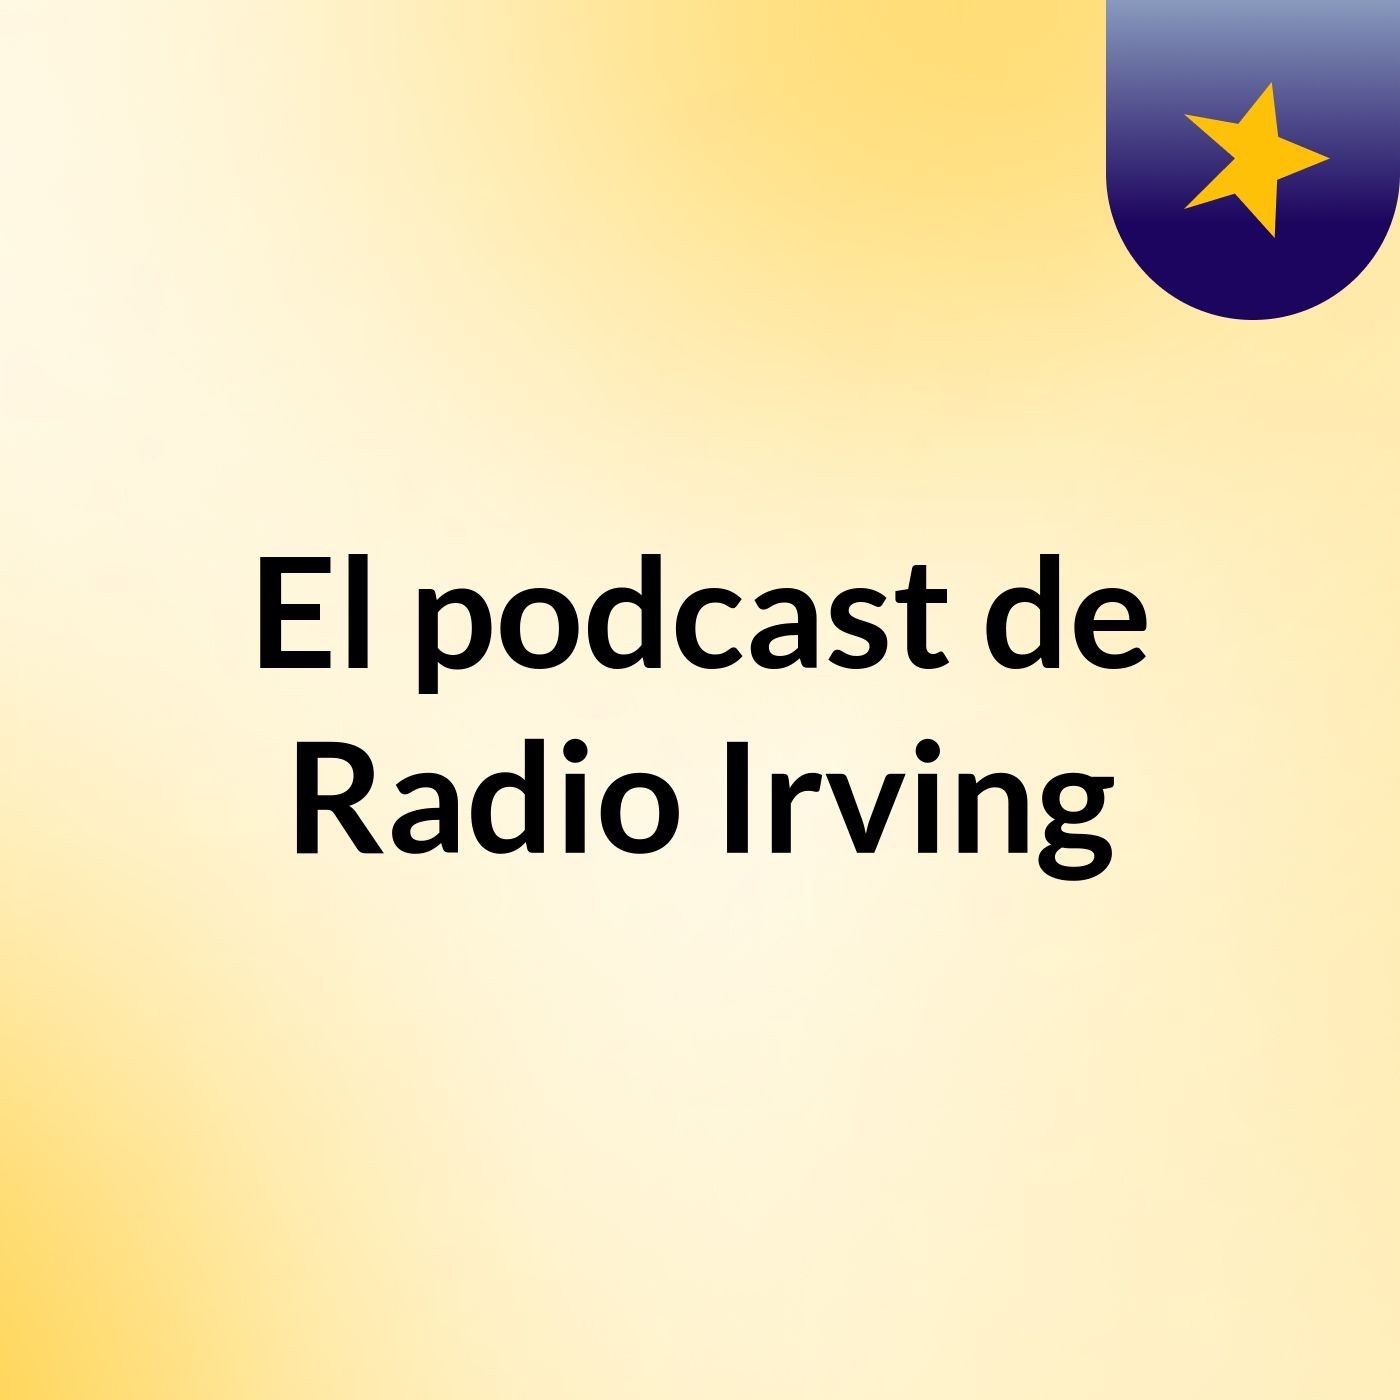 El podcast de Radio Irving